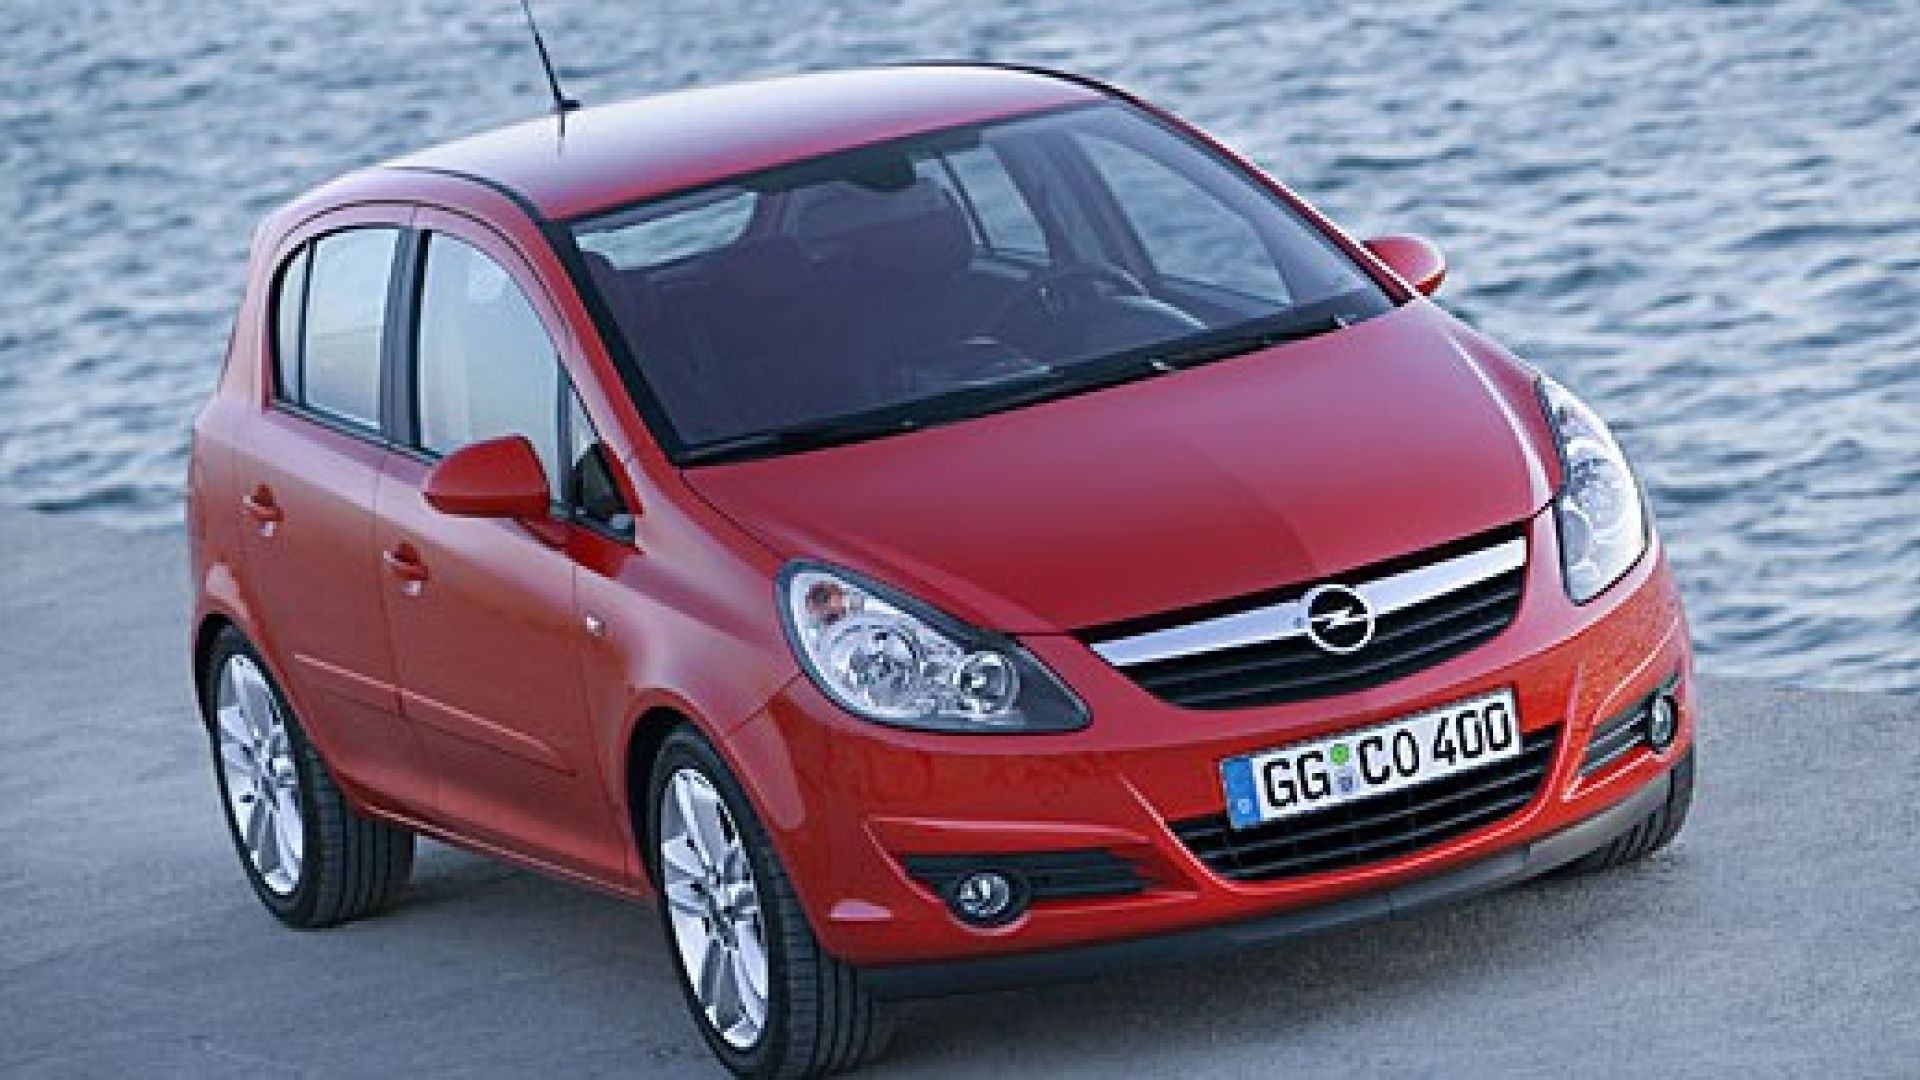 Opel corsa 1.0. Opel Corsa 5d. Opel Corsa 2009. Опель Корса 1.3 дизель. Opel Corsa 2007 5 двери.